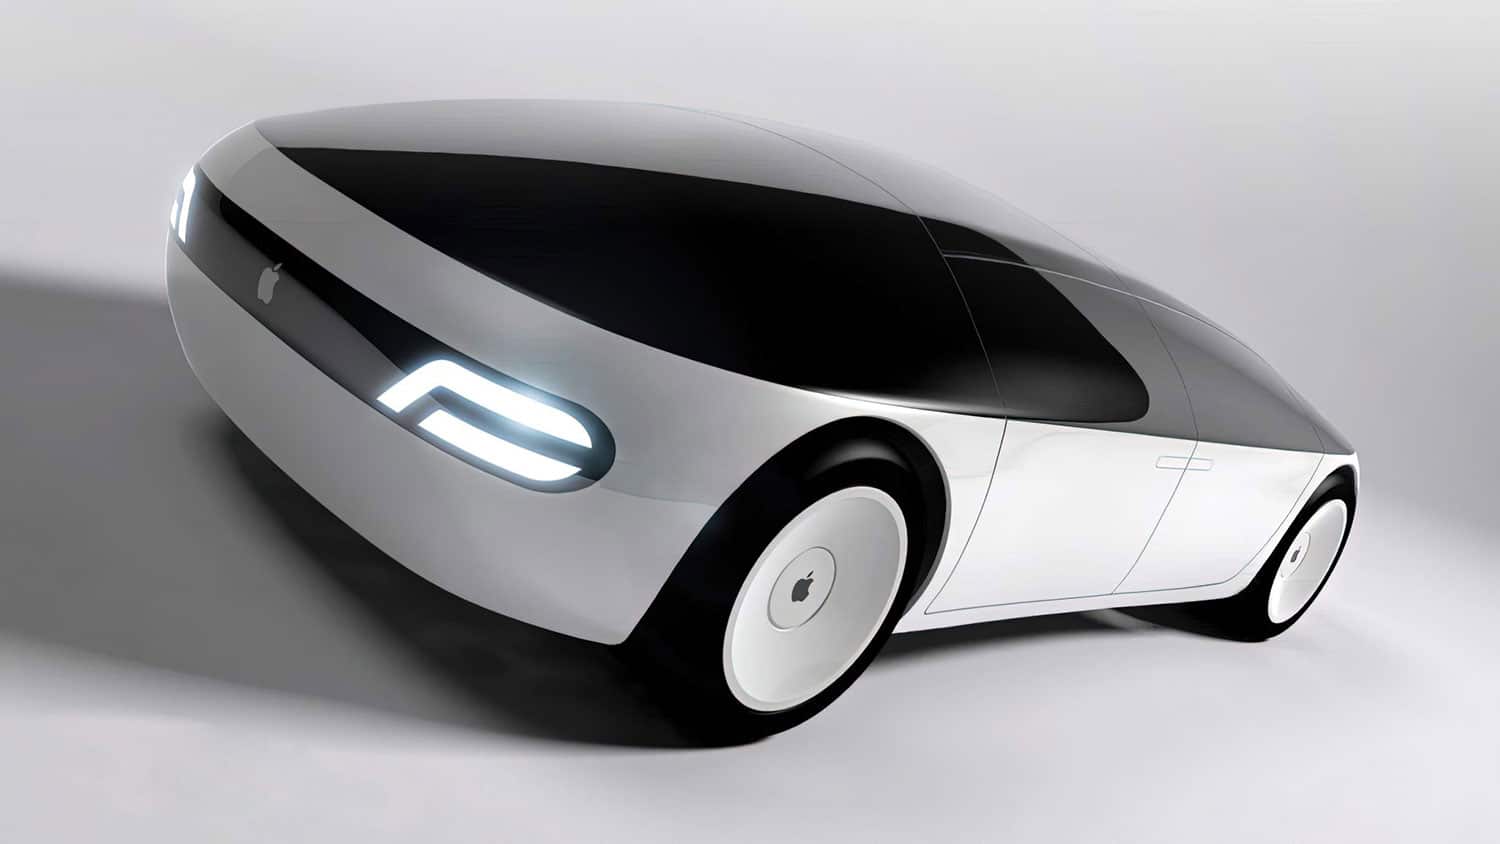 Apple's self-driving car concept.